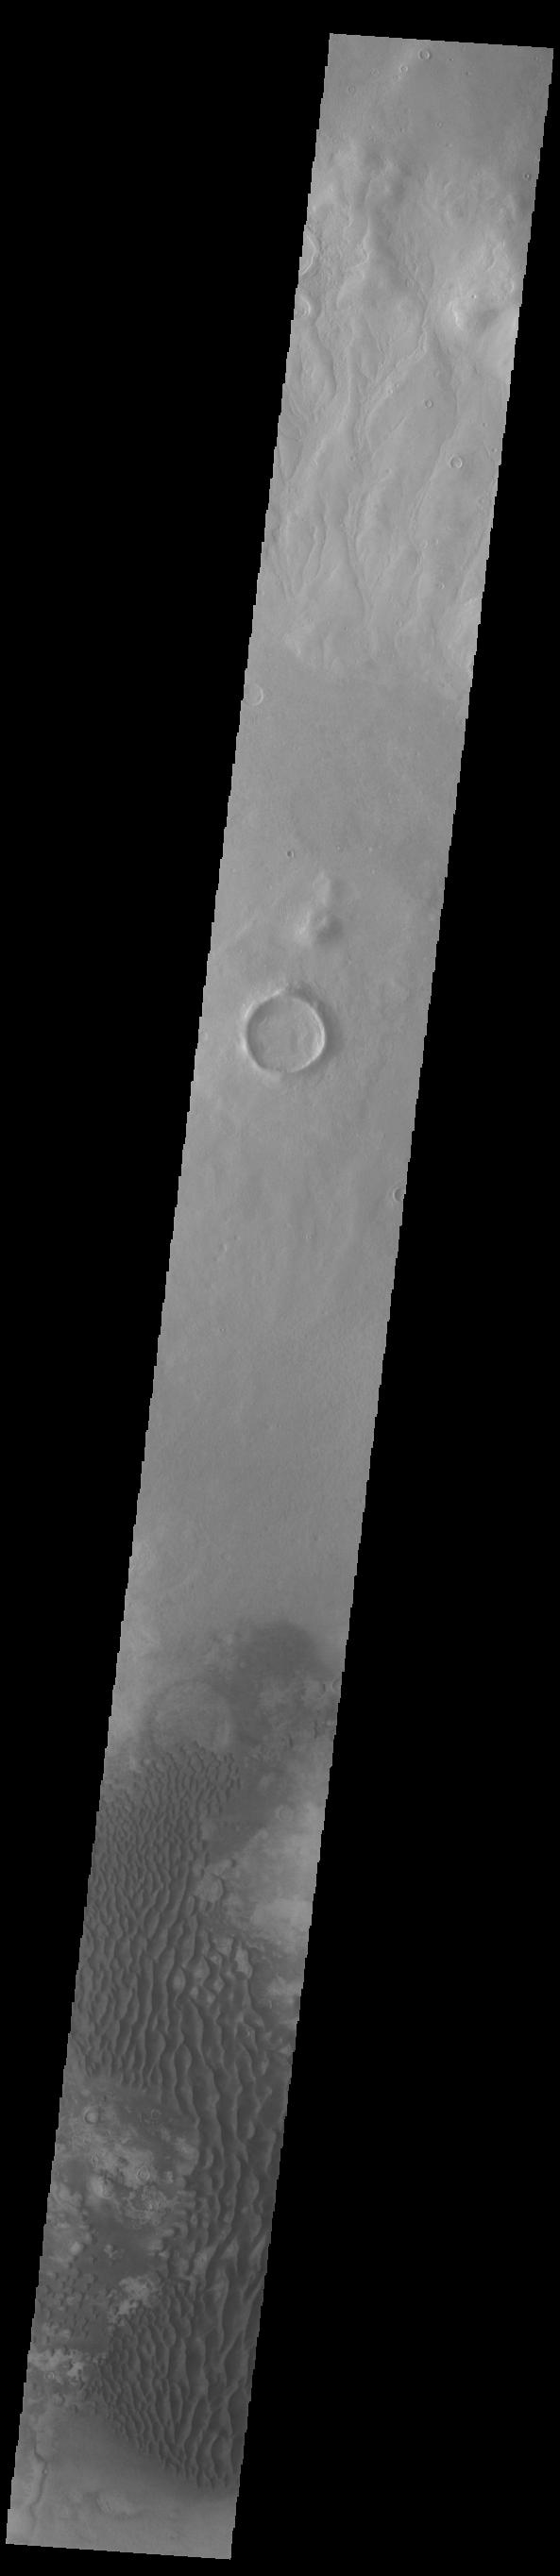 PIA24415: Kaiser Crater Dunes